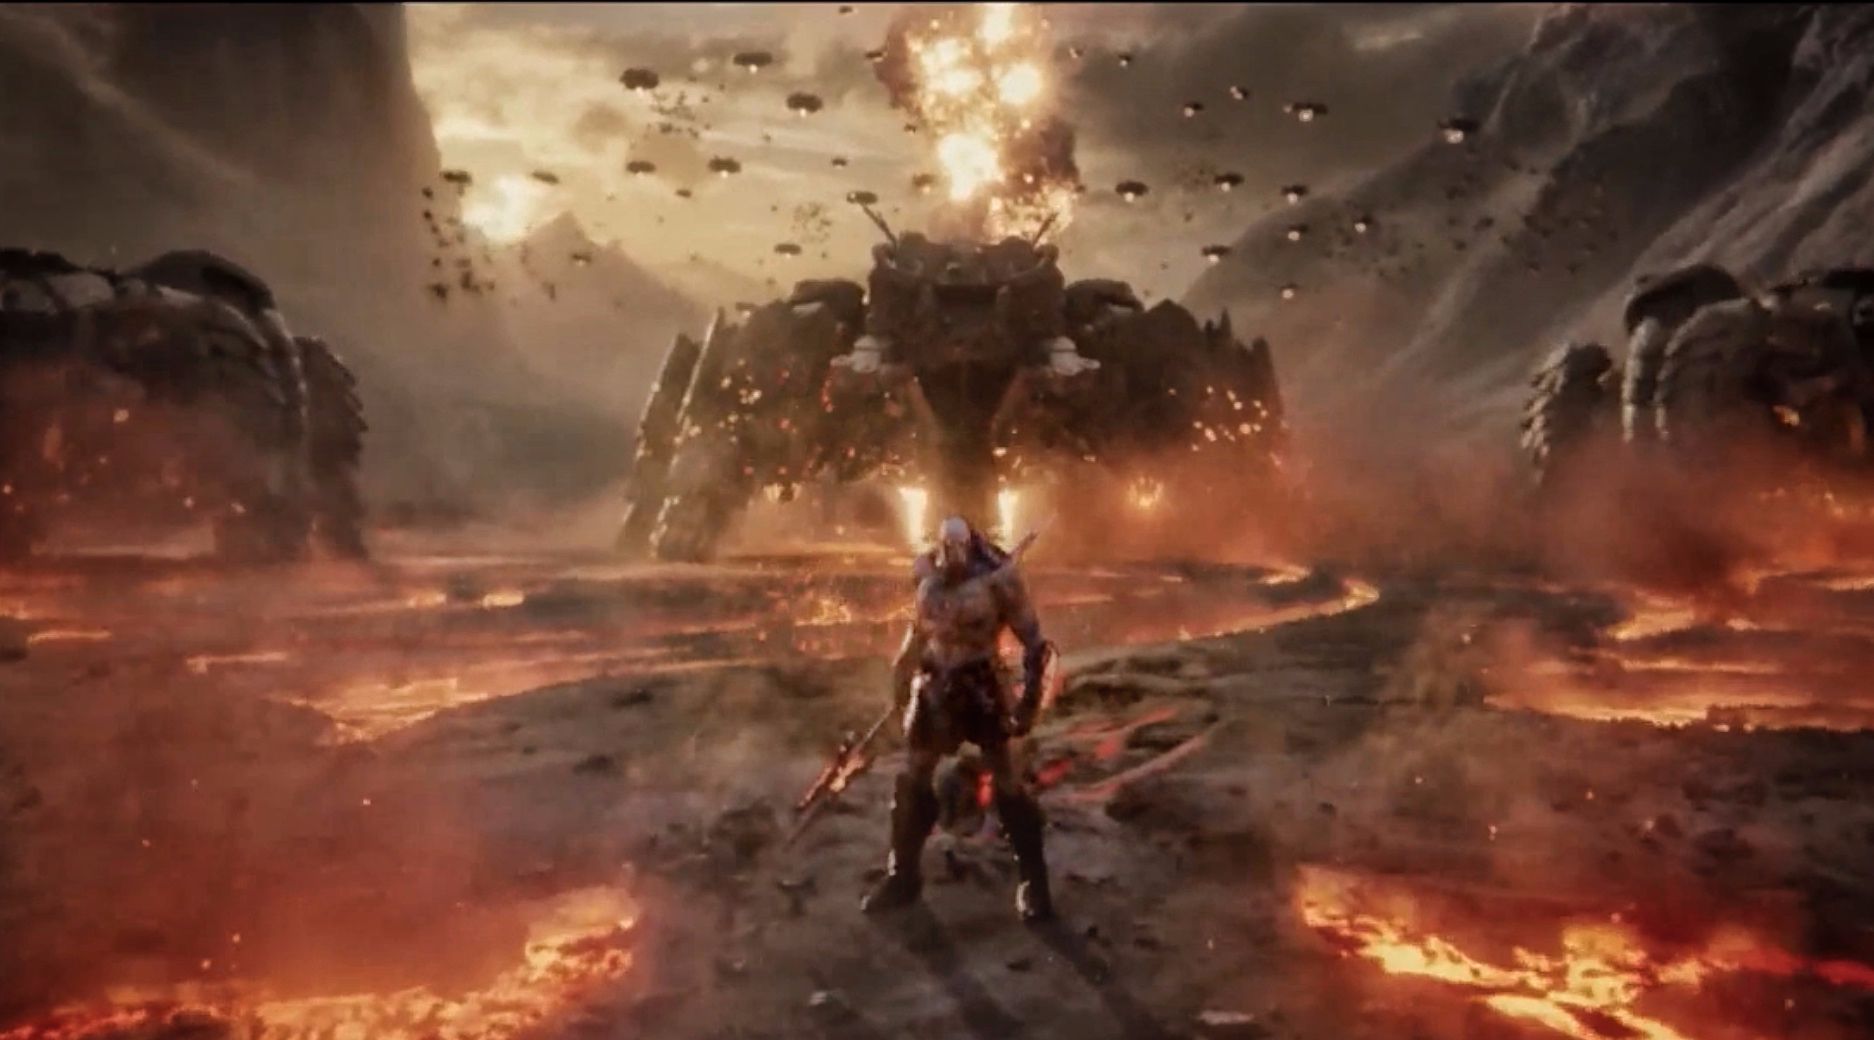 Zack Snyder's Justice League Darkseid image